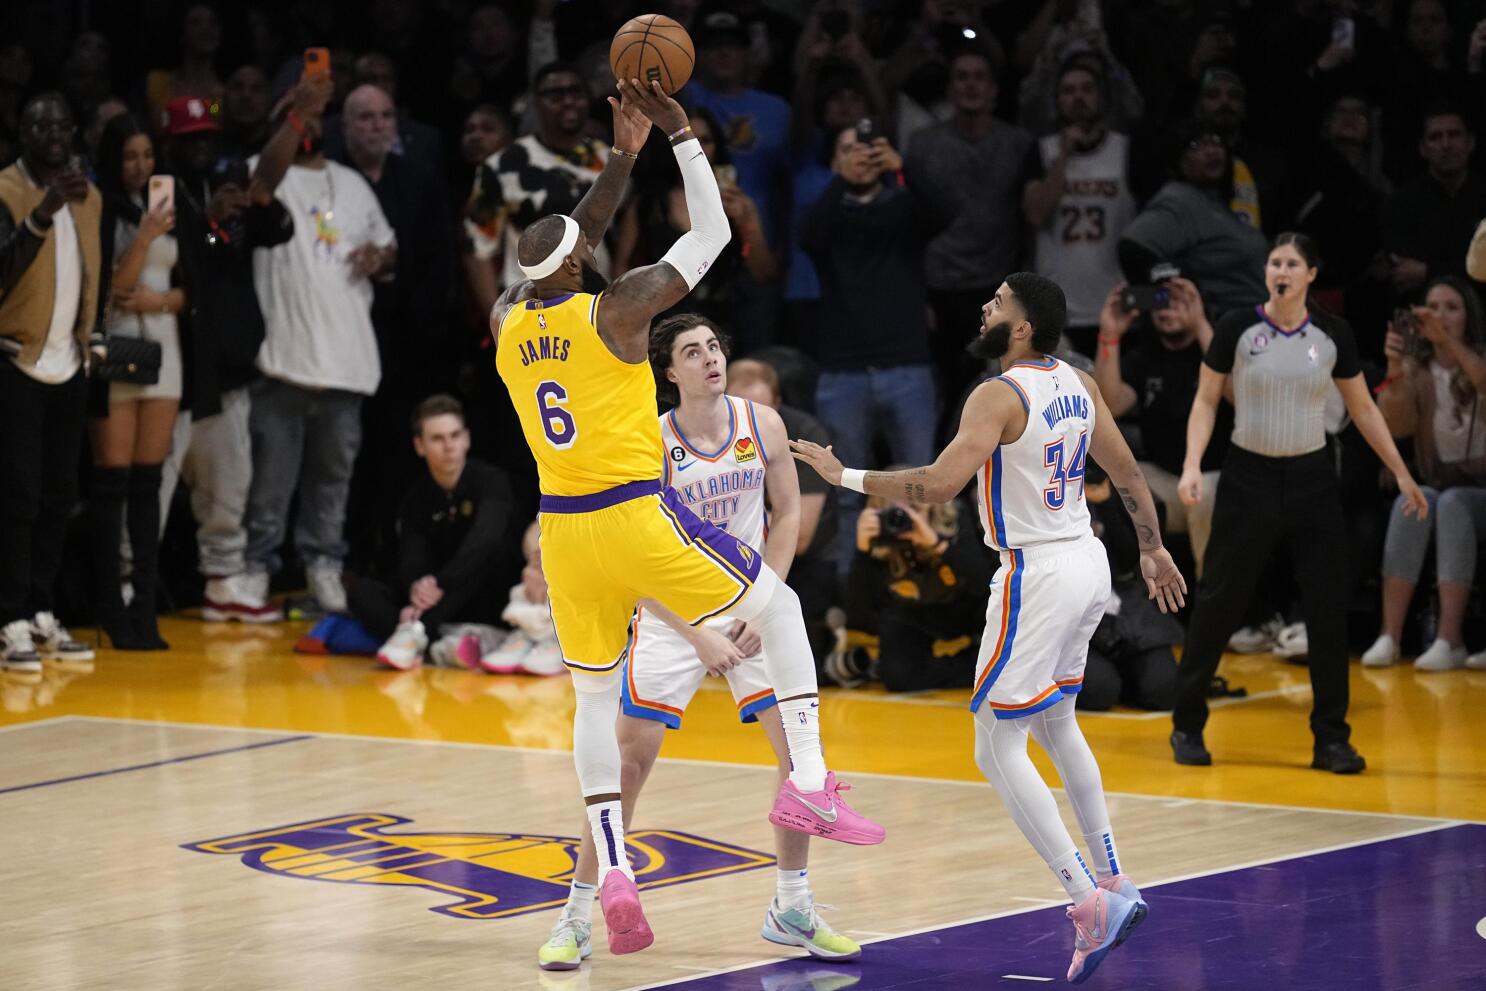 Lakers fans: Congratulate LeBron James as breaks the NBA scoring